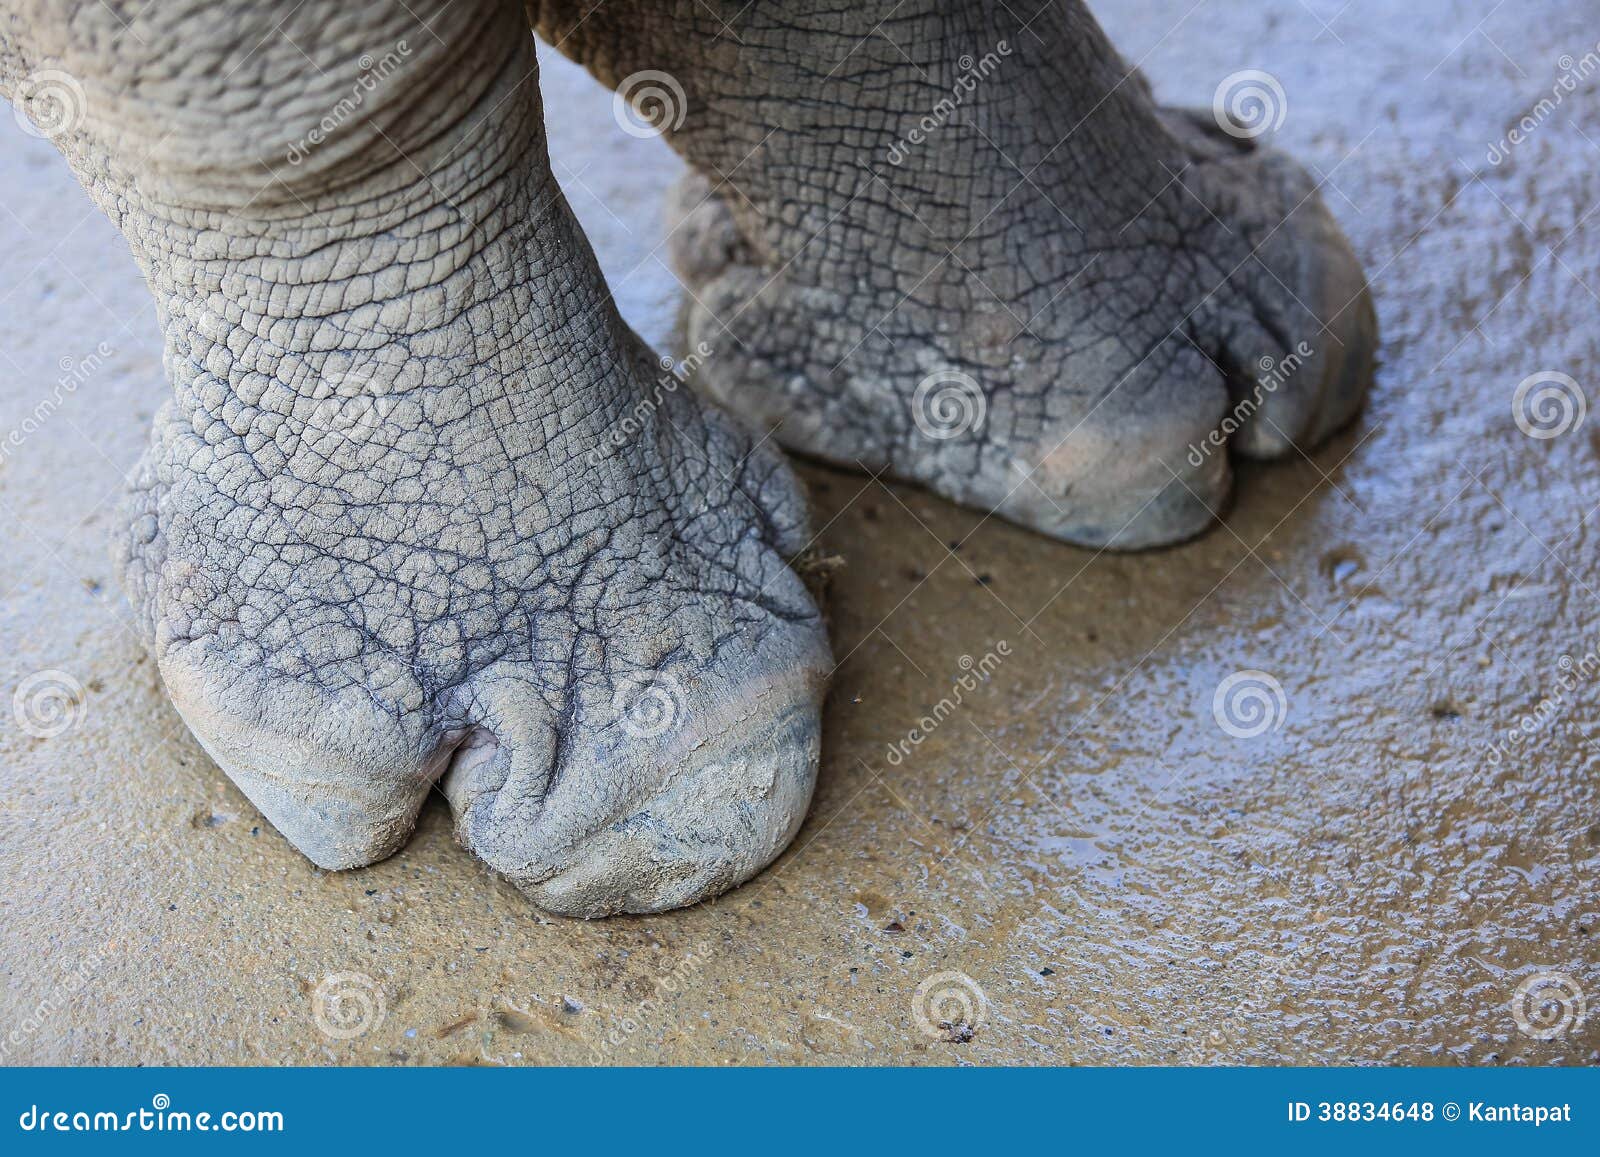 rhinoceros foot